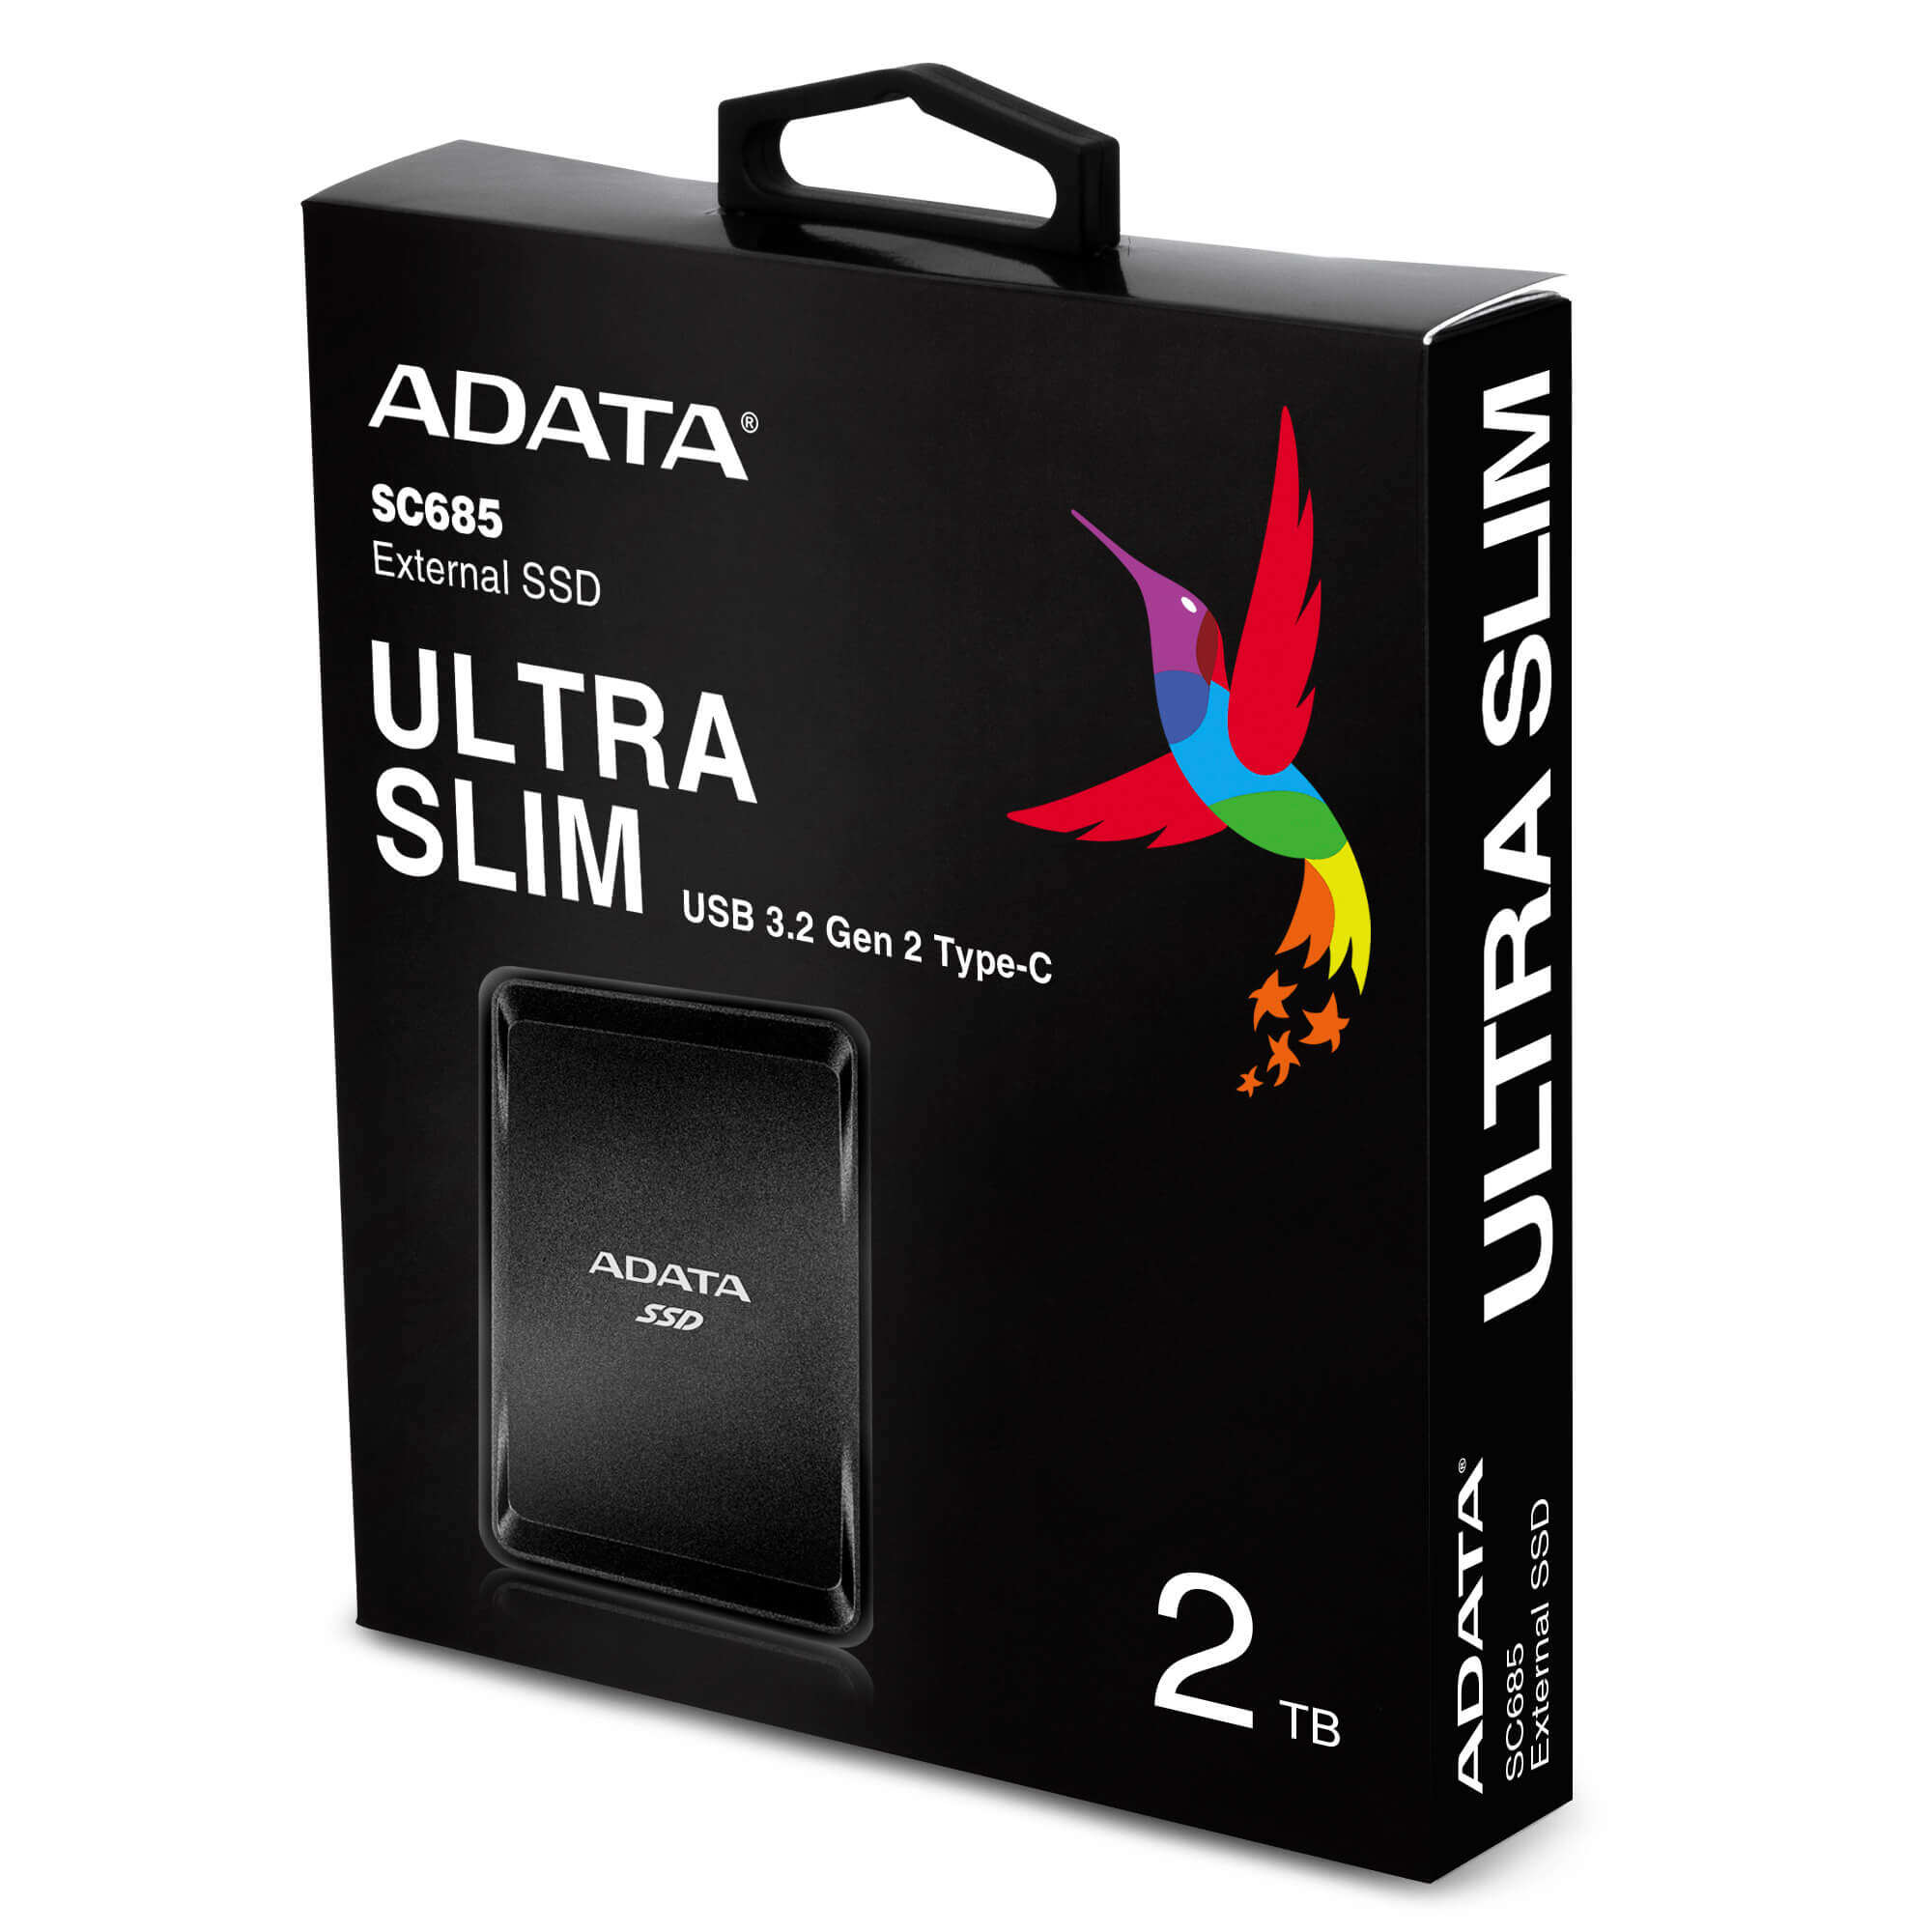 ADATA SC685 ULTRA SLIM USB3.2 TYPE-C EXTERNAL SSD 1TB